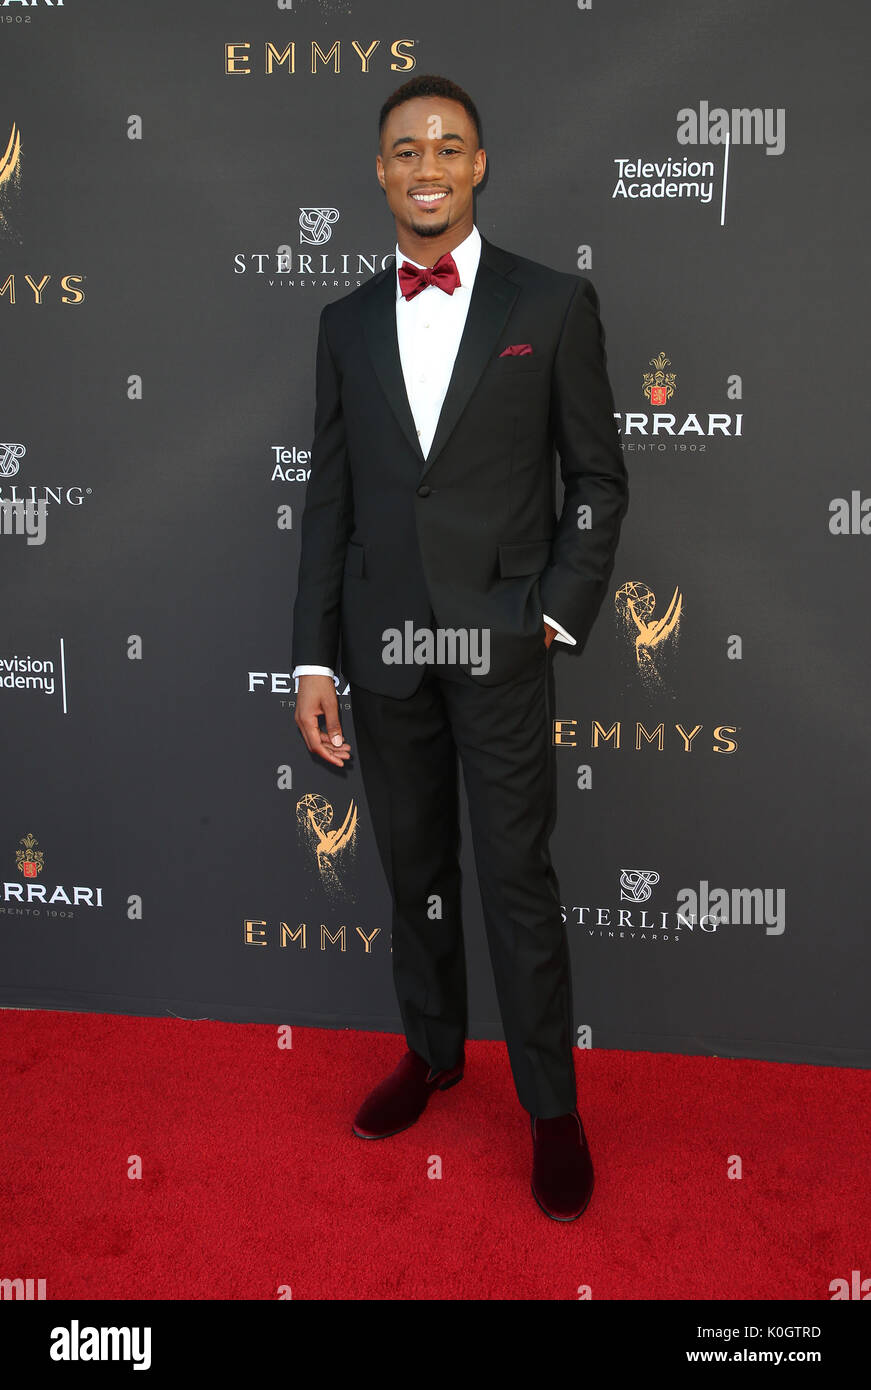 69 Los Angeles Bereich Emmy Awards mit: Jessie T. Usher Wo: Los Angeles, California, United States Wann: 23 Aug 2017 Quelle: FayesVision/WENN.com Stockfoto